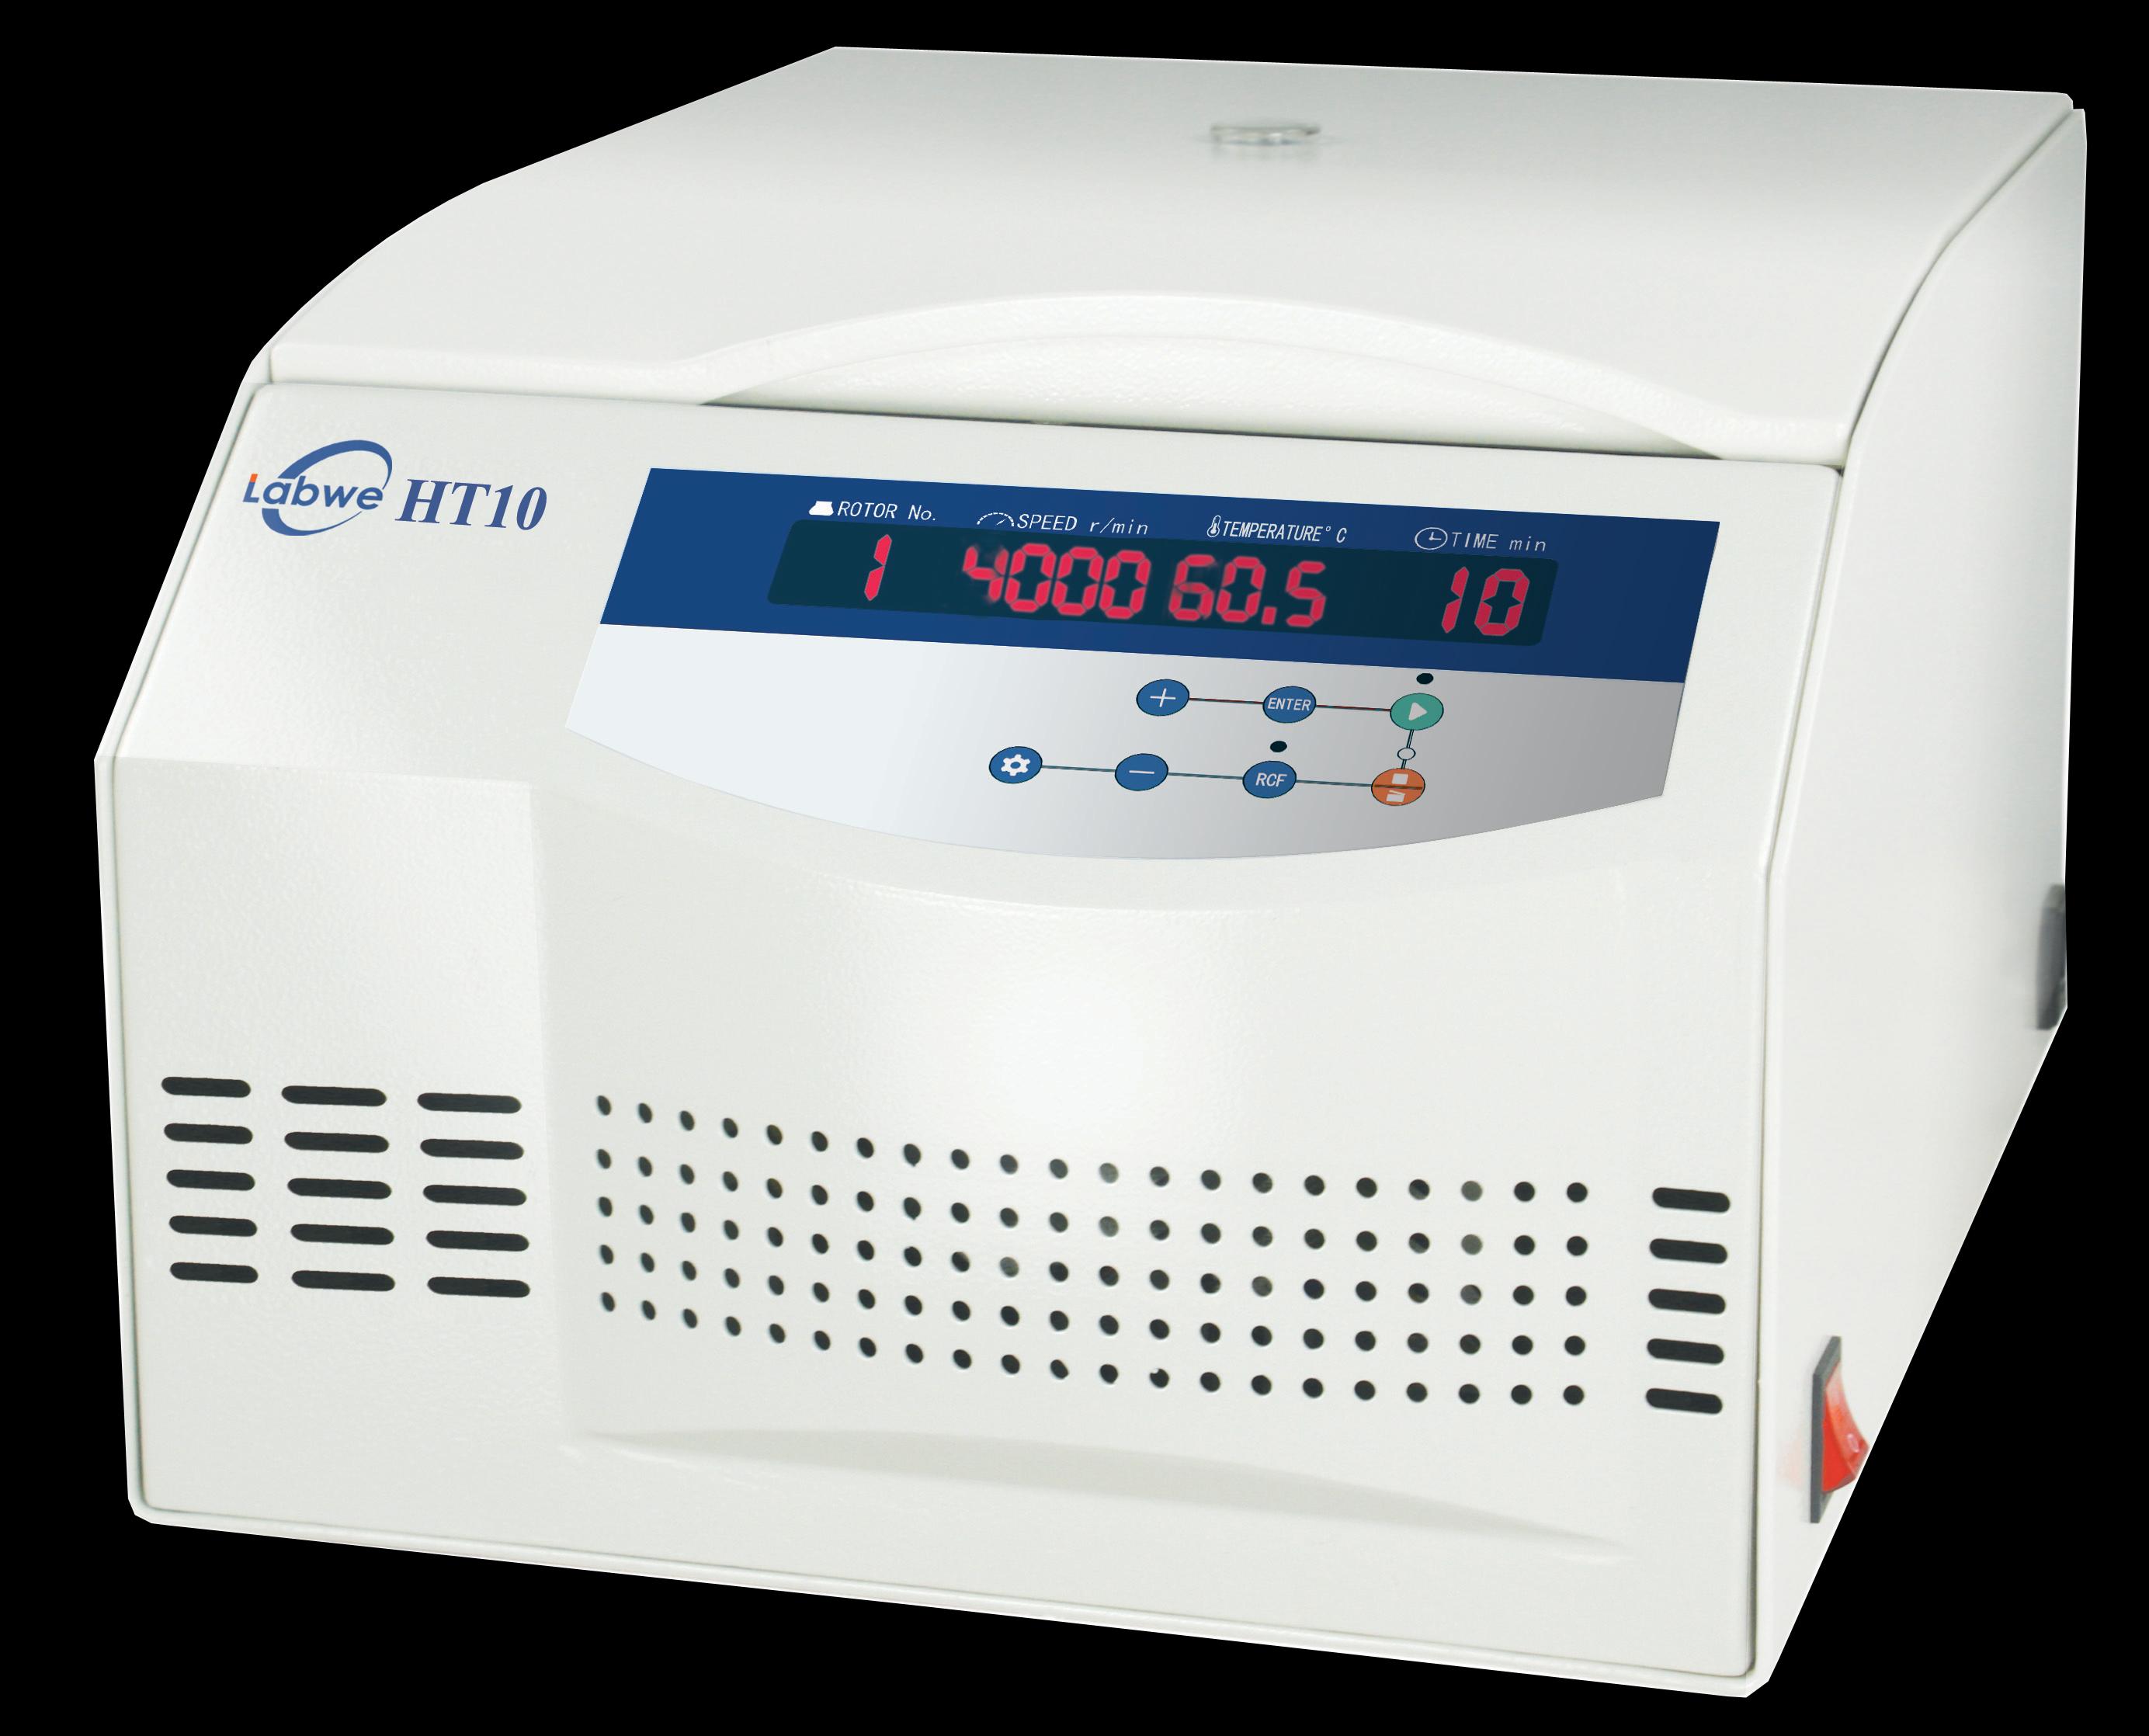 High Quality Medical Instrument Blood Card Centrifuge Machine Ts4